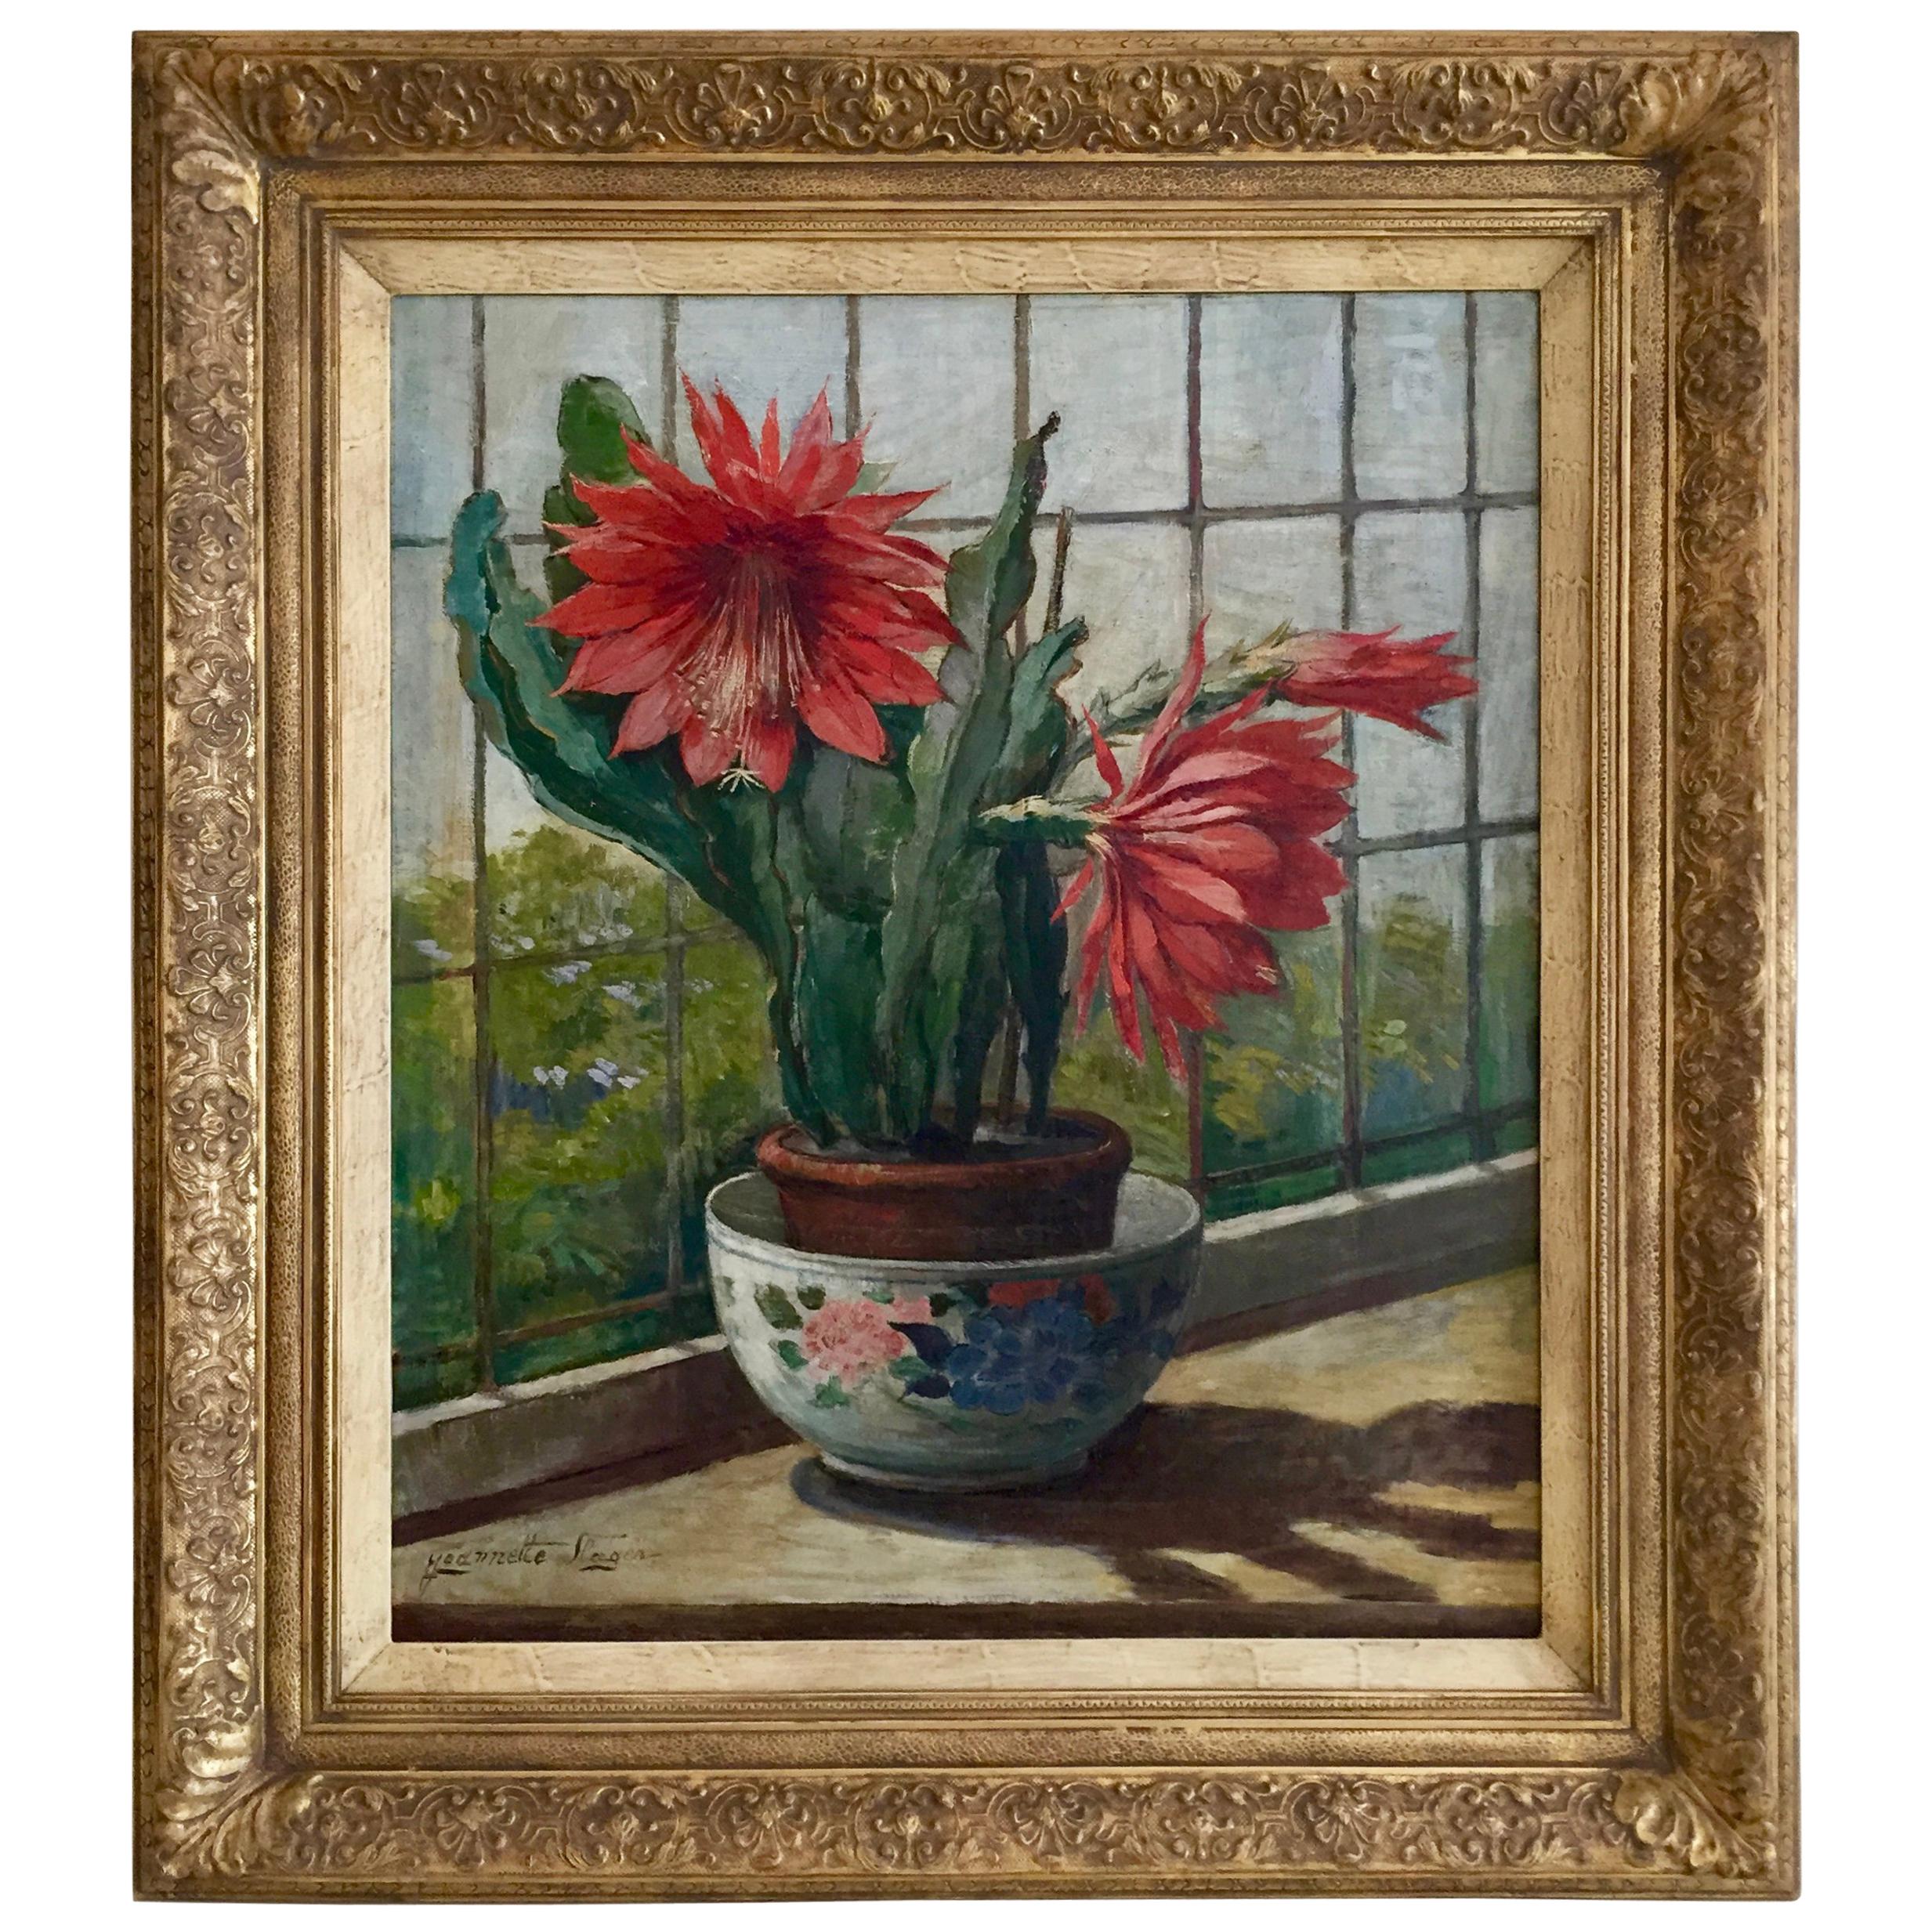 Flowering Cactus, Antique Dutch Painting, Jeanette Slager 1881-1945, 1920 For Sale